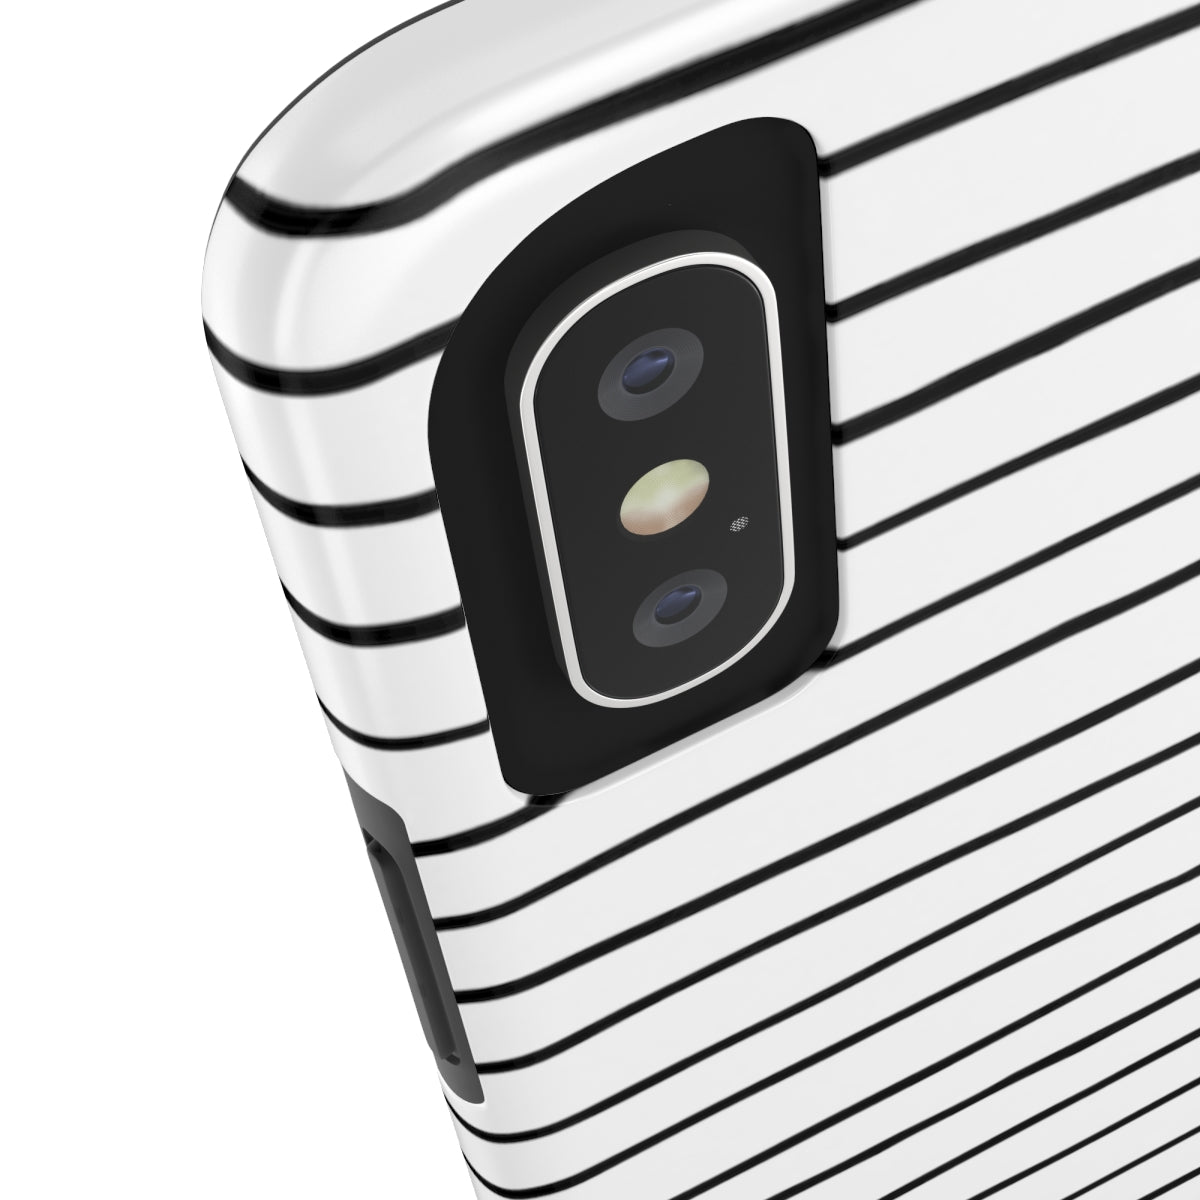 Black & White Stripes Tough Phone Cases, Case-Mate